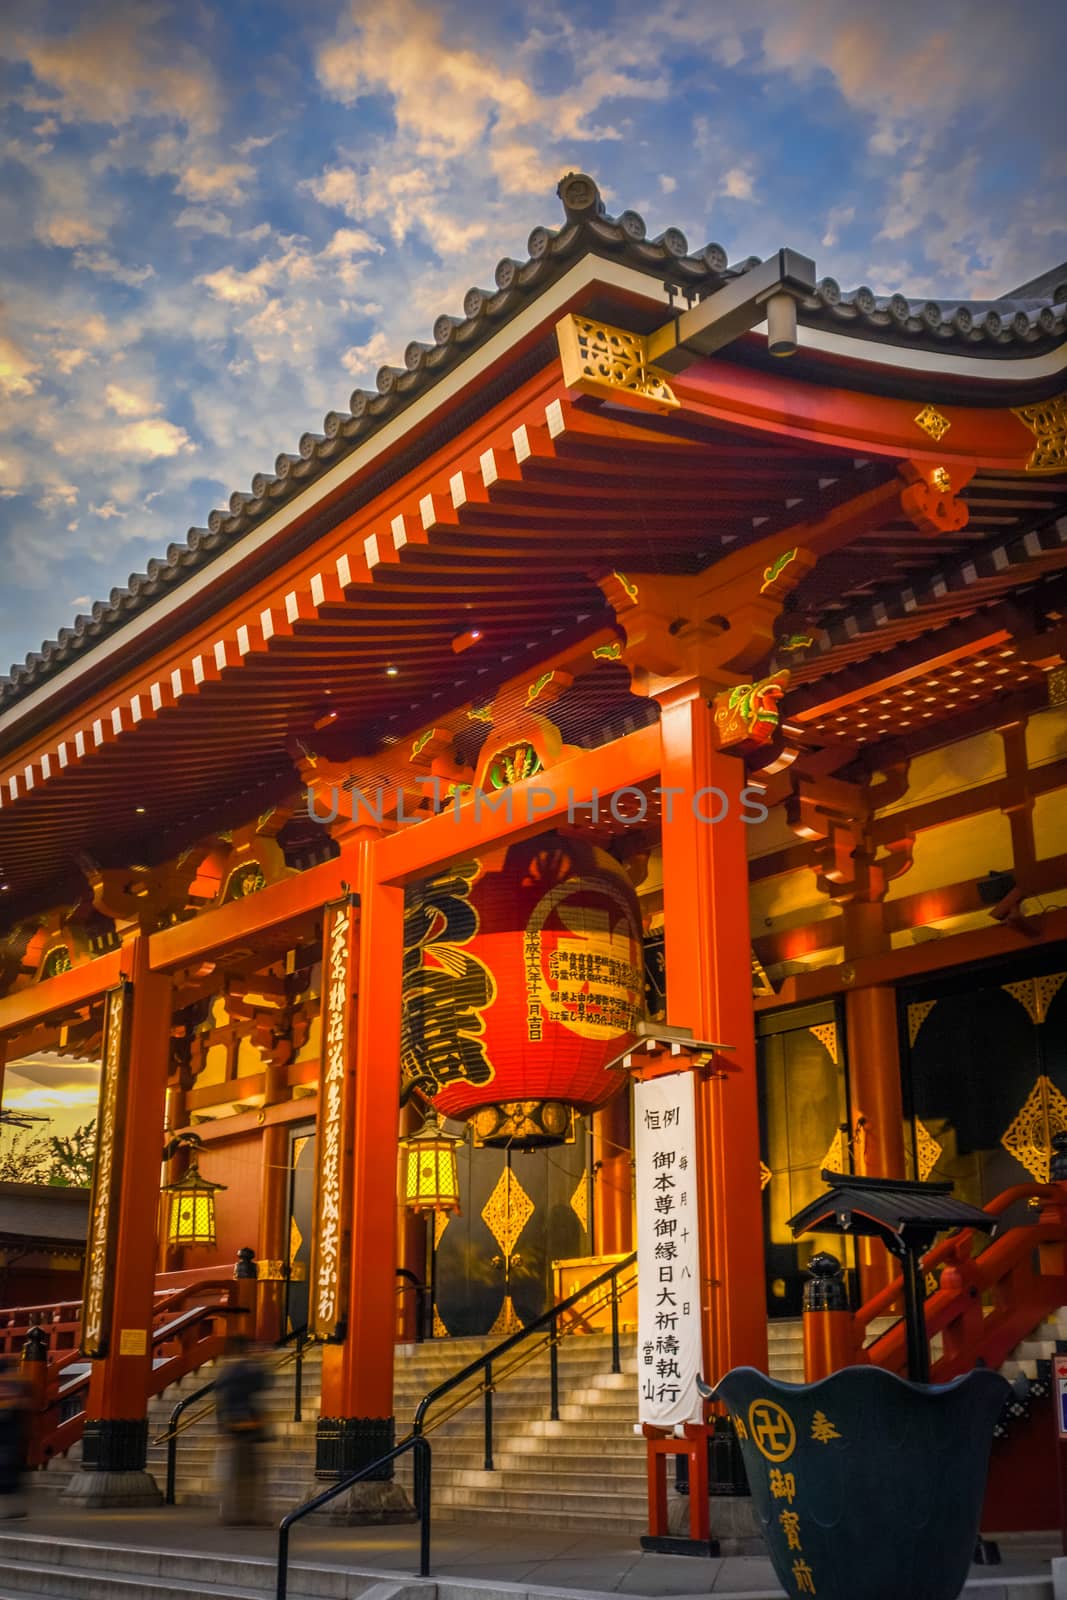 Senso-ji temple Hondo at sunset, Tokyo, Japan by daboost